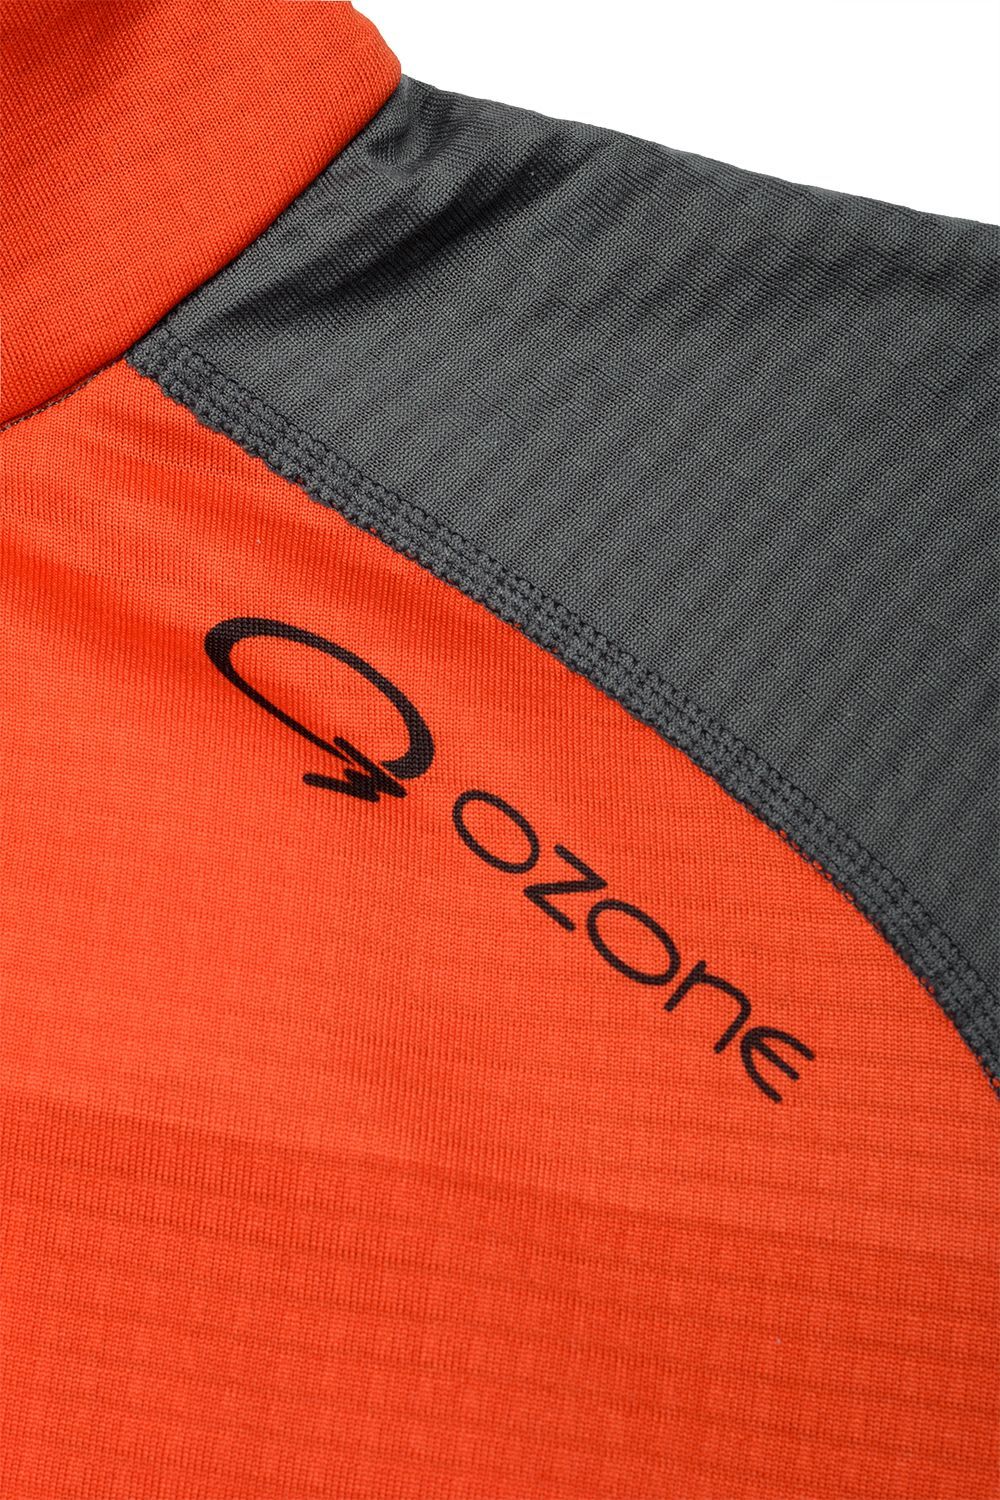 O3 Ozone Куртка спортивная мужская O3 Ozone Vort